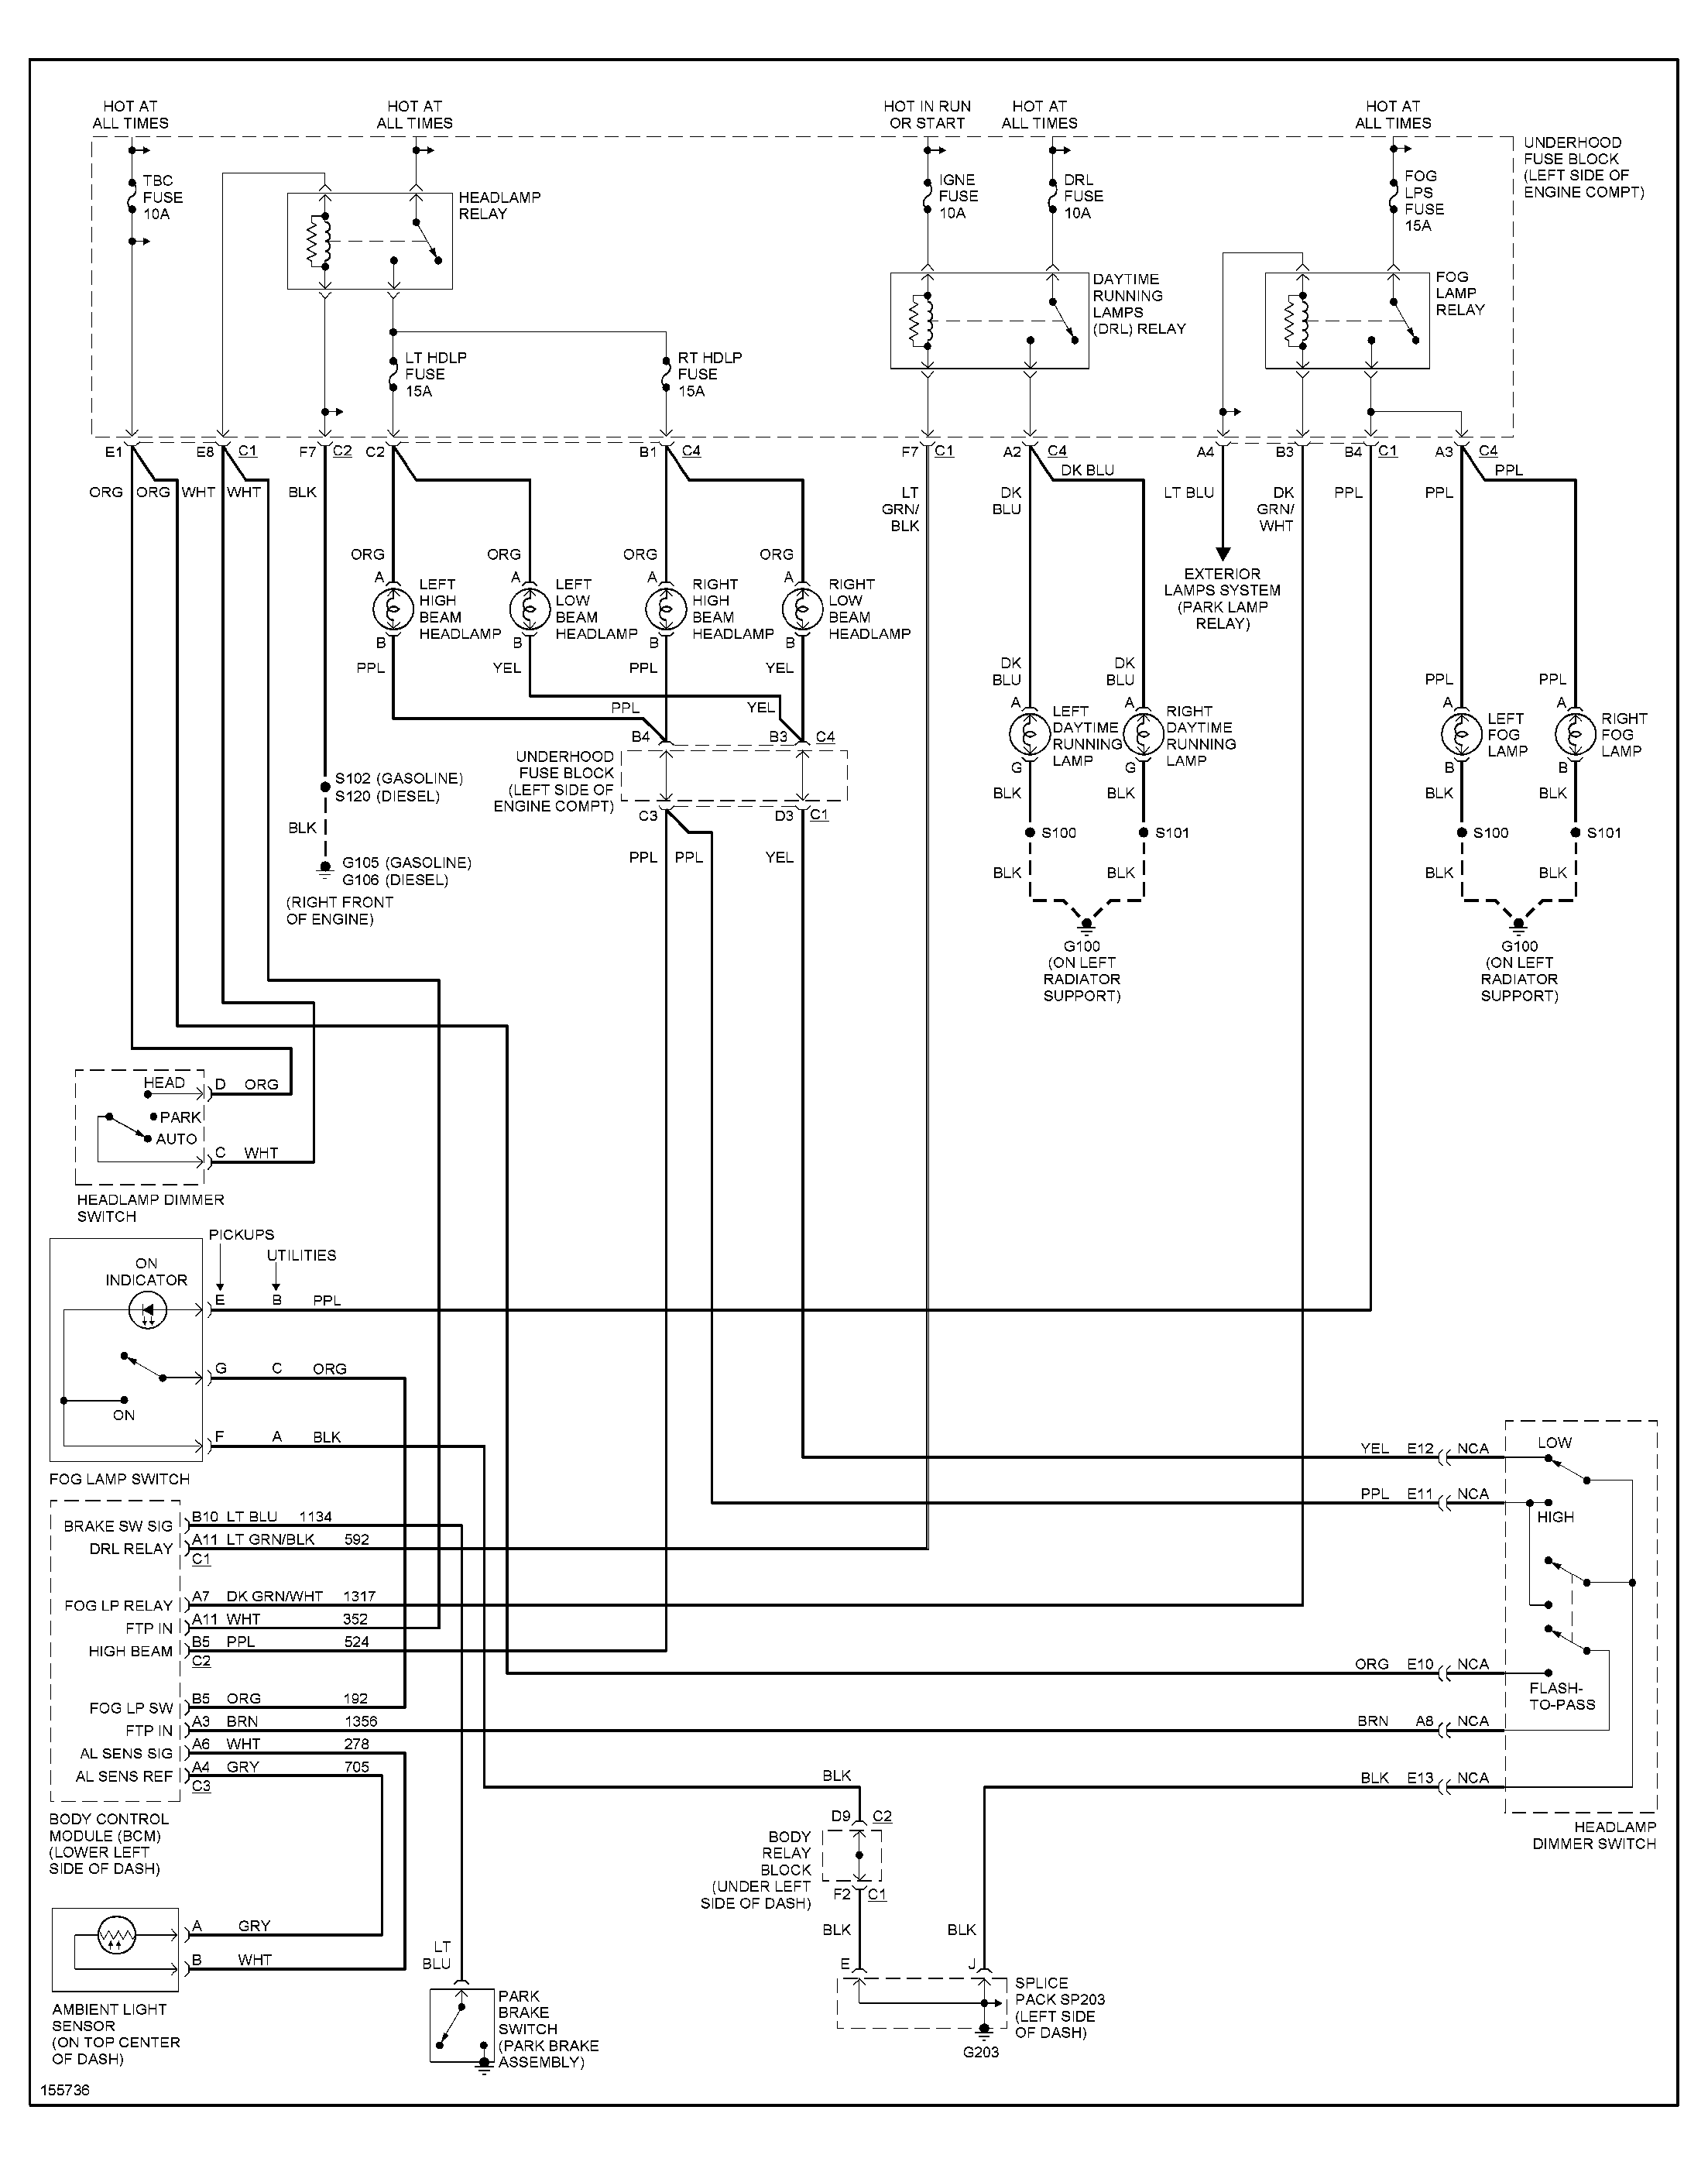 wiring diagram for 1990 western plow to a 2003silverado